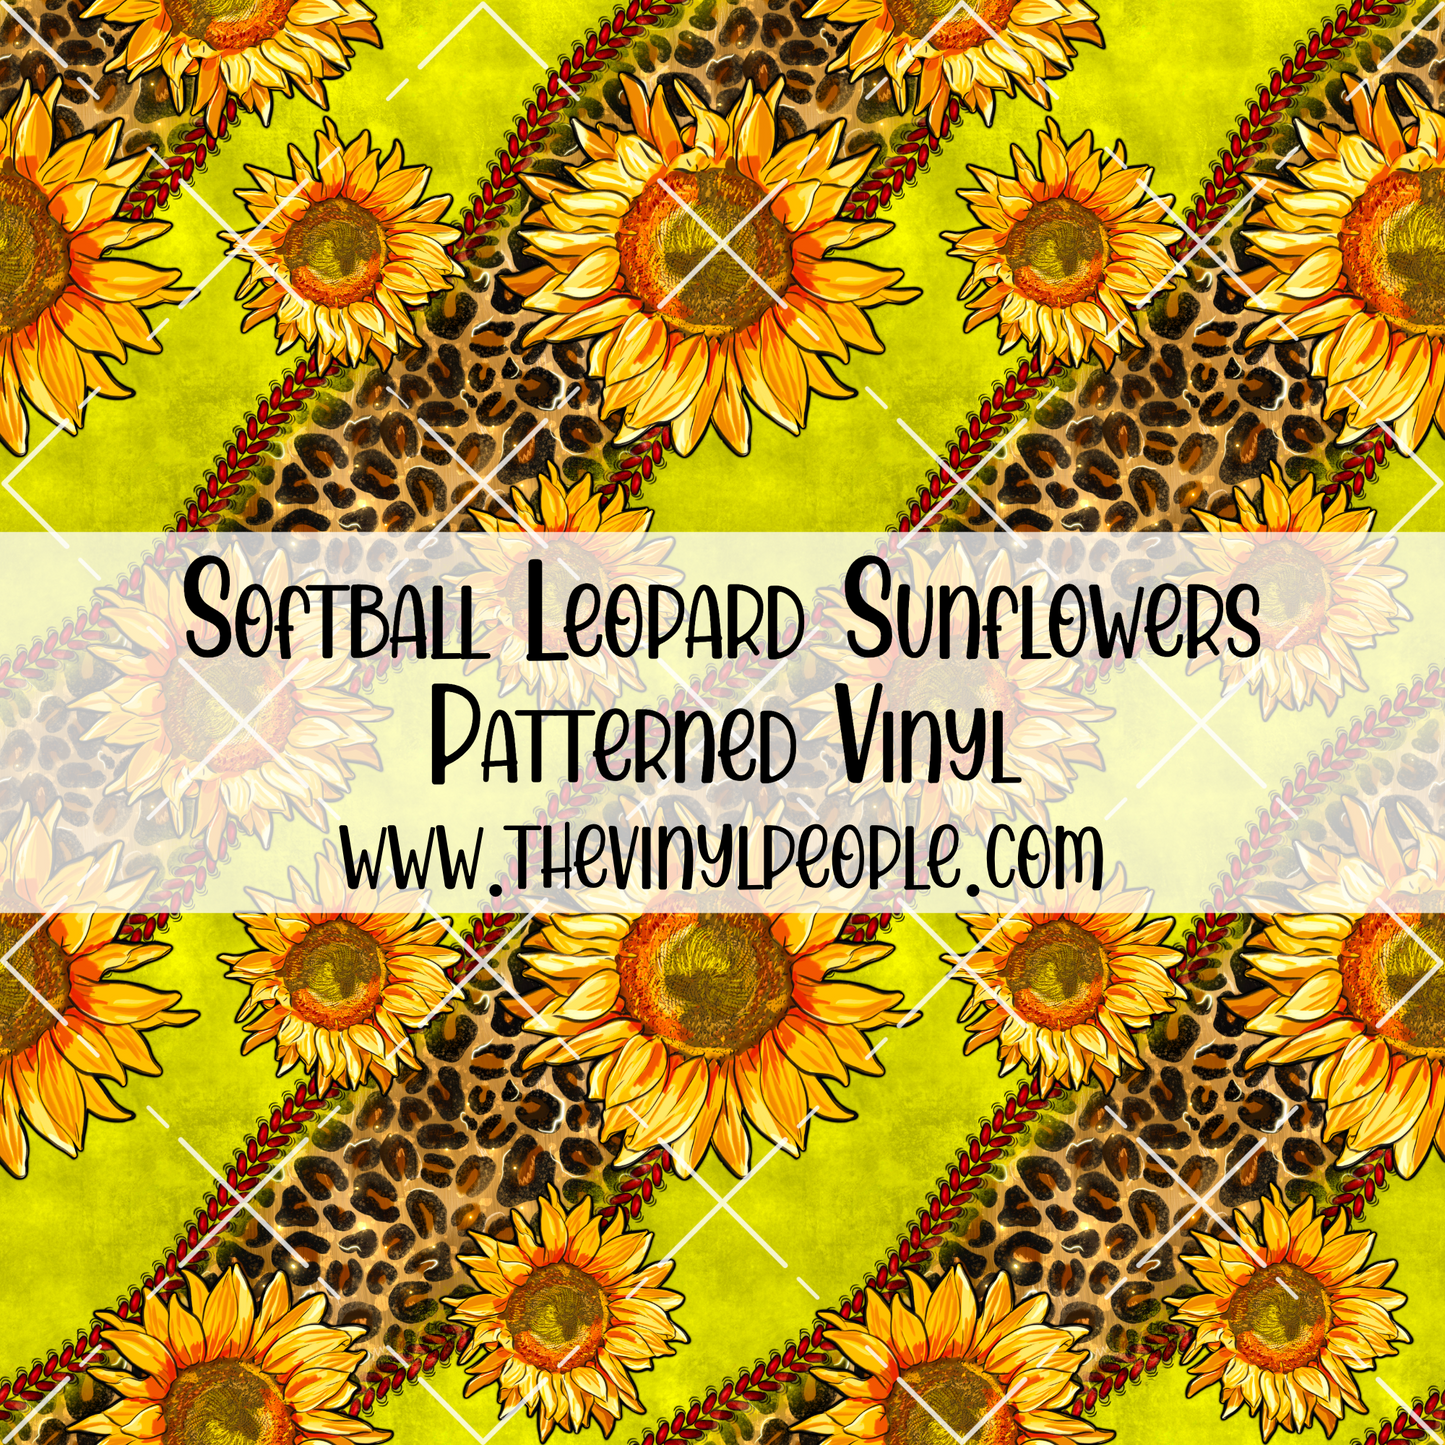 Softball Leopard Sunflowers Patterned Vinyl